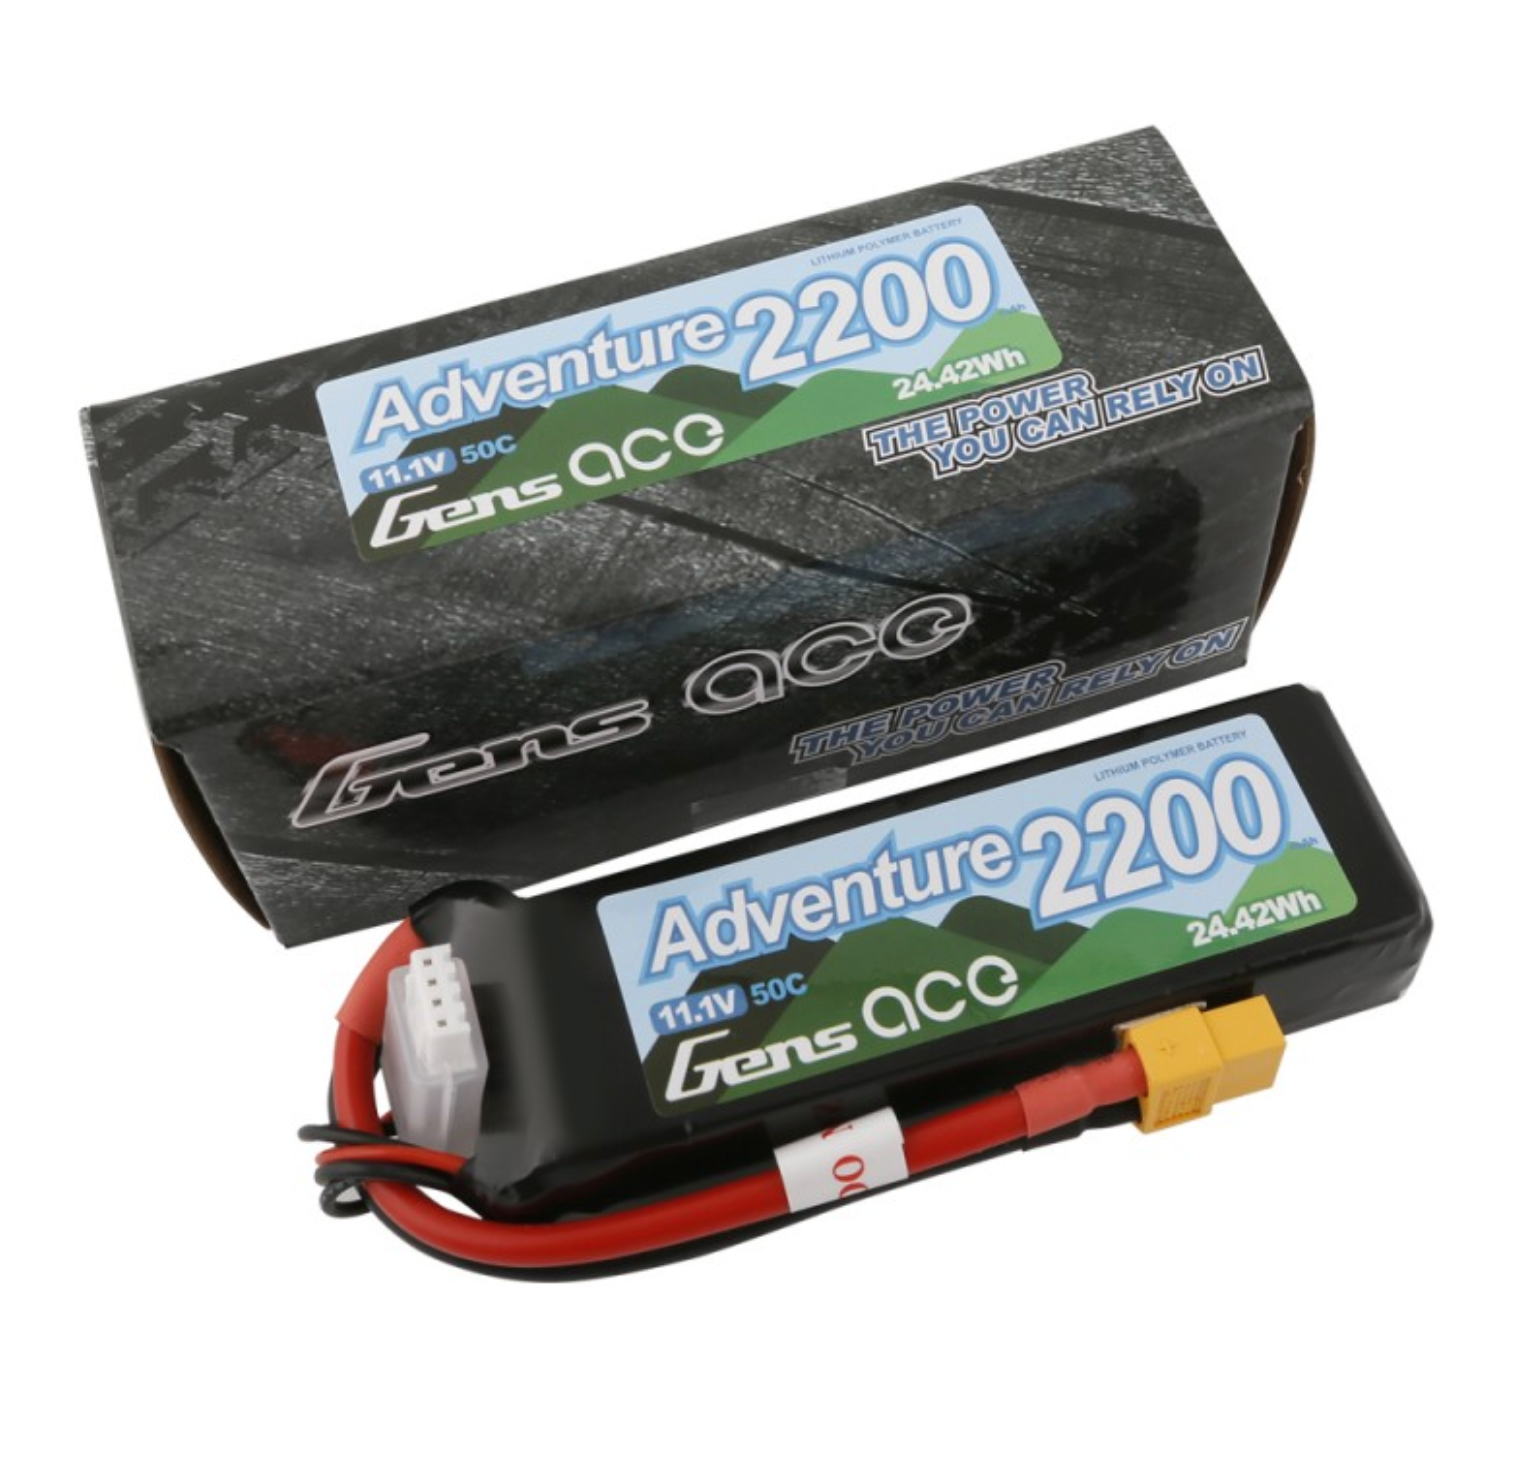 Gens Ace Adventure 2200mAh 3S1P 11.1V 50C Lipo Battery with XT60 Plug for RC Crawler